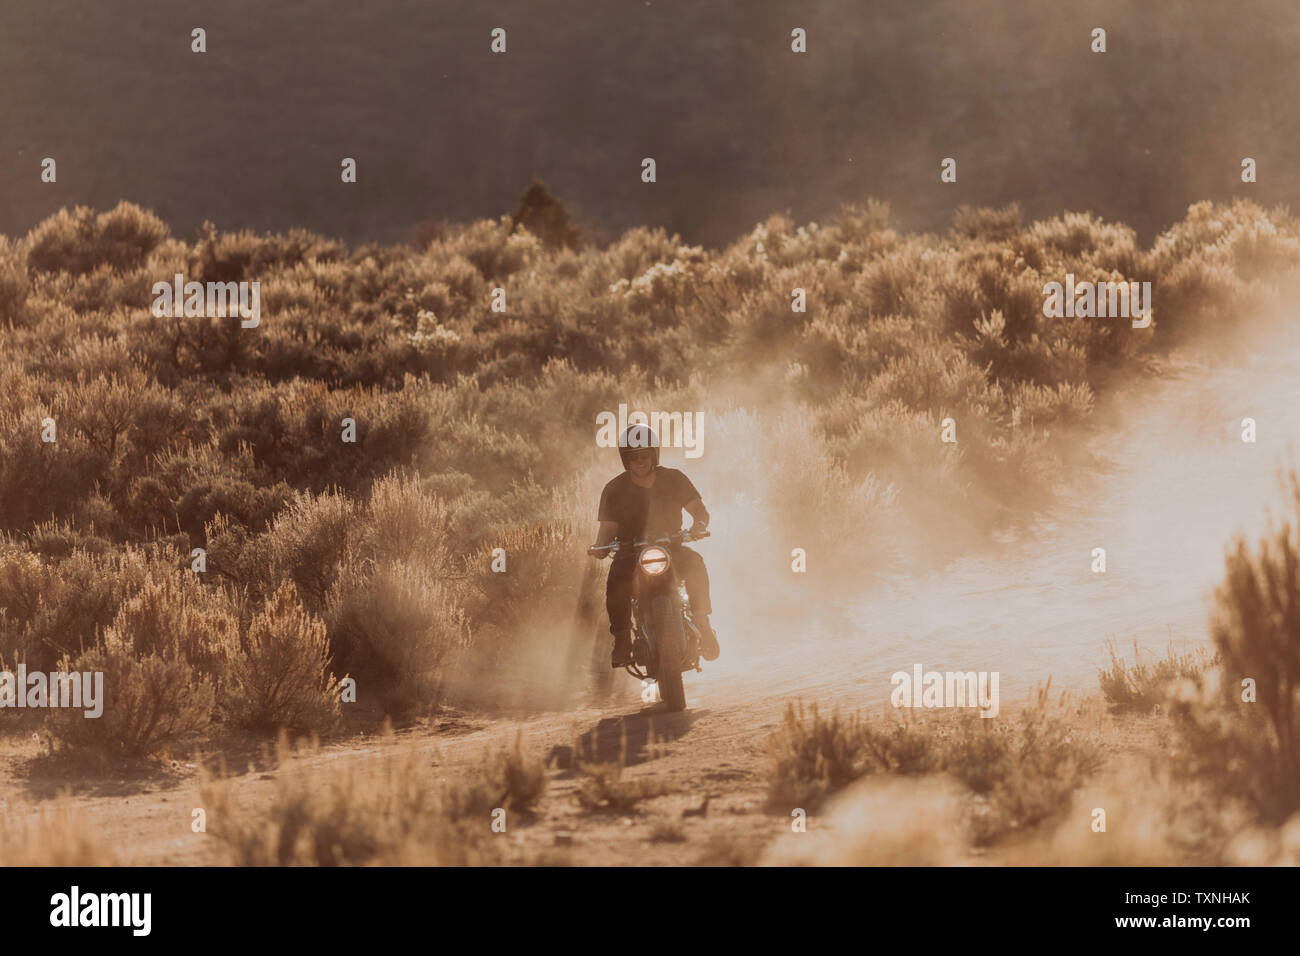 Motorbiker raising dust, Kennedy Meadows, California, US Stock Photo